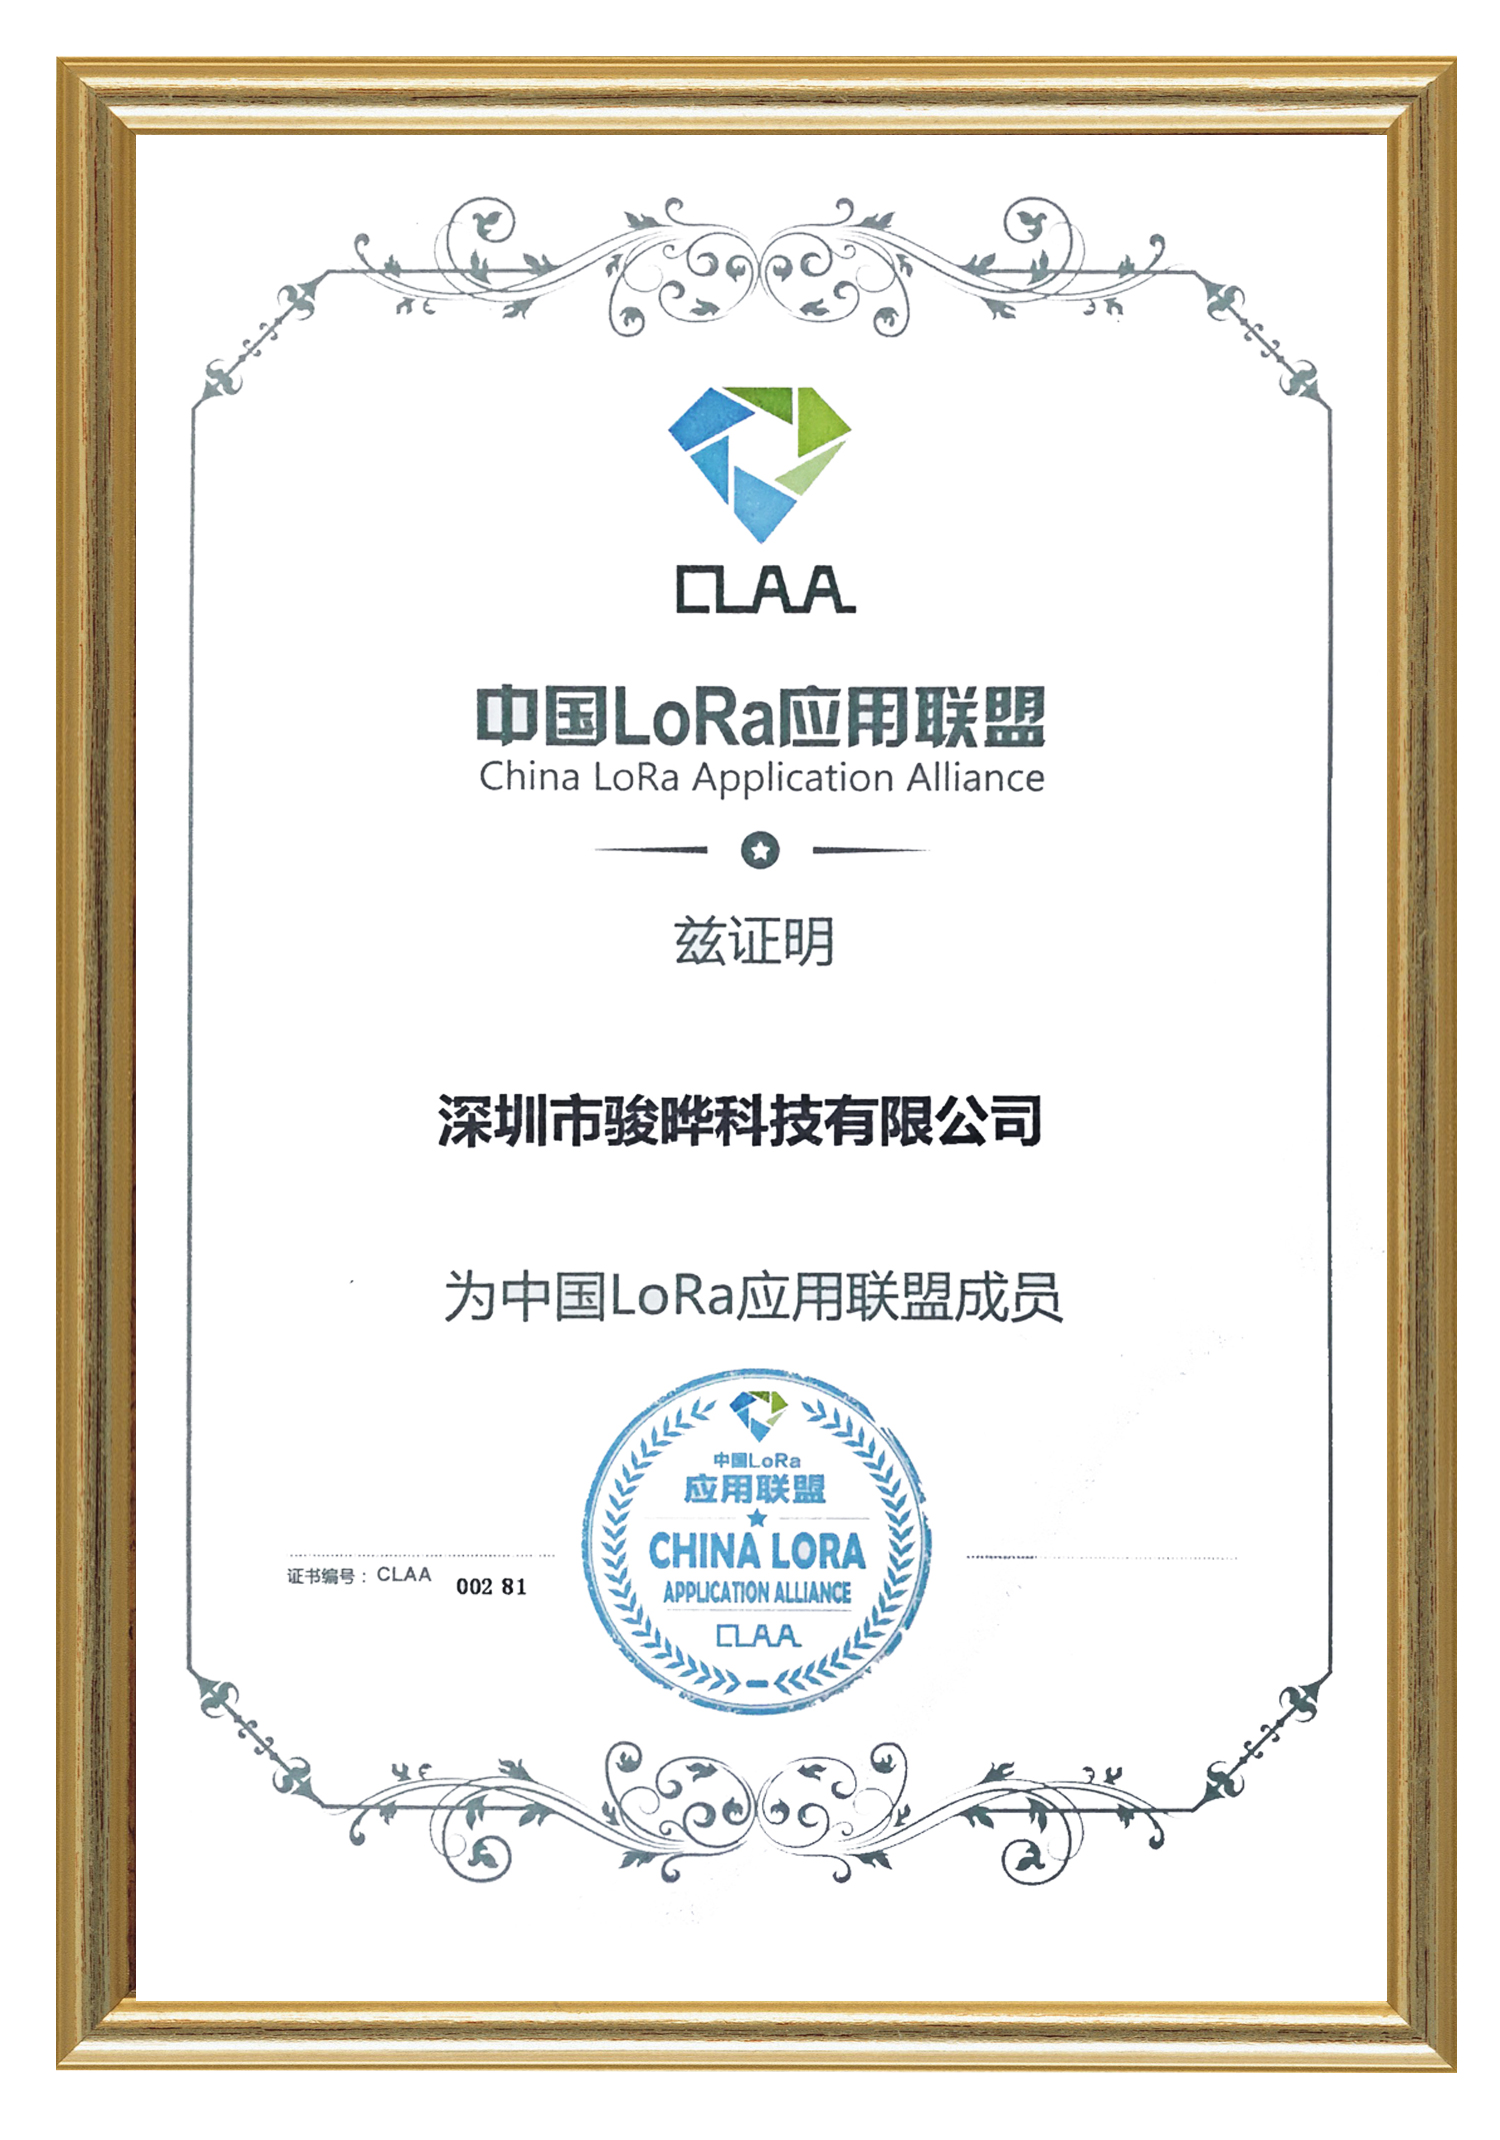  CLAA (China LoRa Application Alliance) Member - DreamLNK